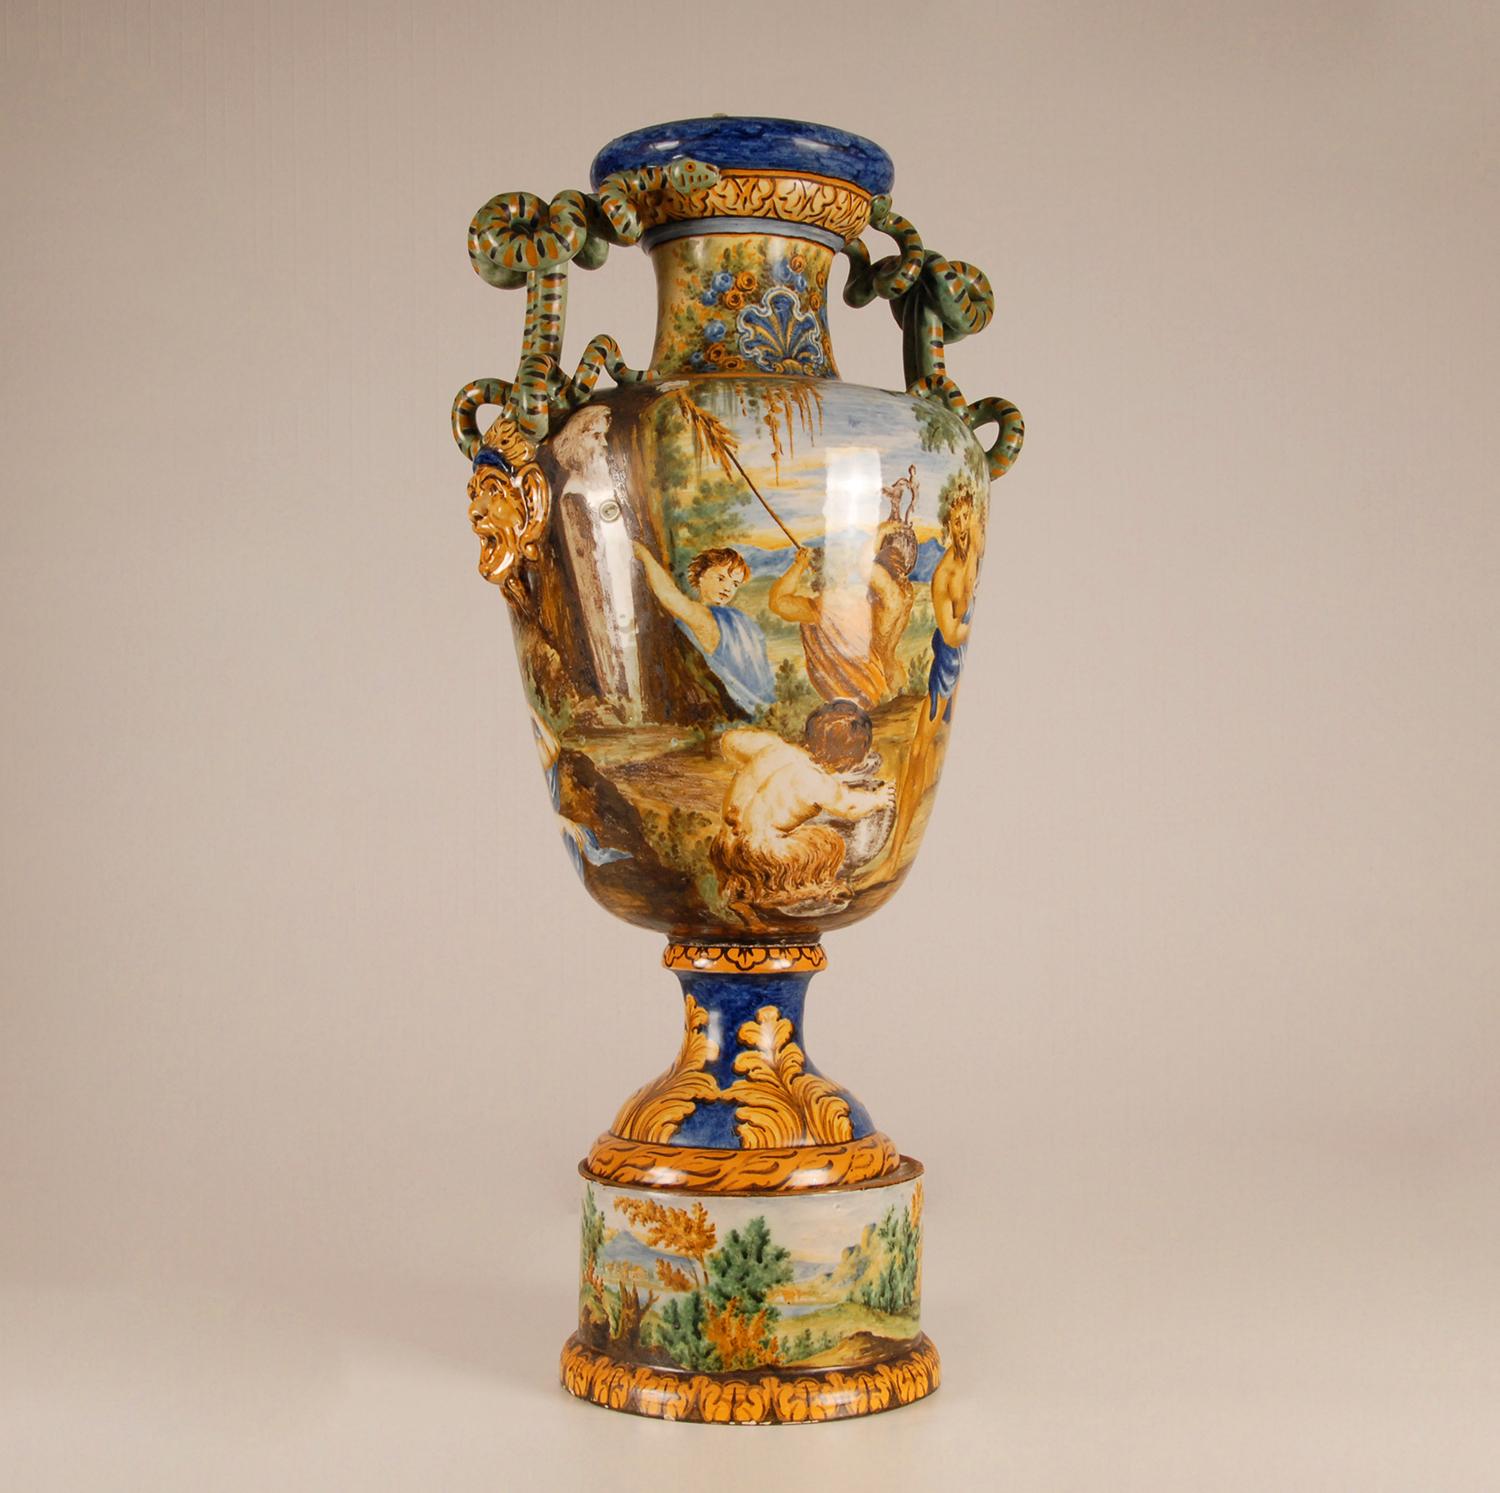 Renaissance Revival Majolica Renaissance Vase Serpentine Handles Bacchus Italy 19th Century Revival  For Sale